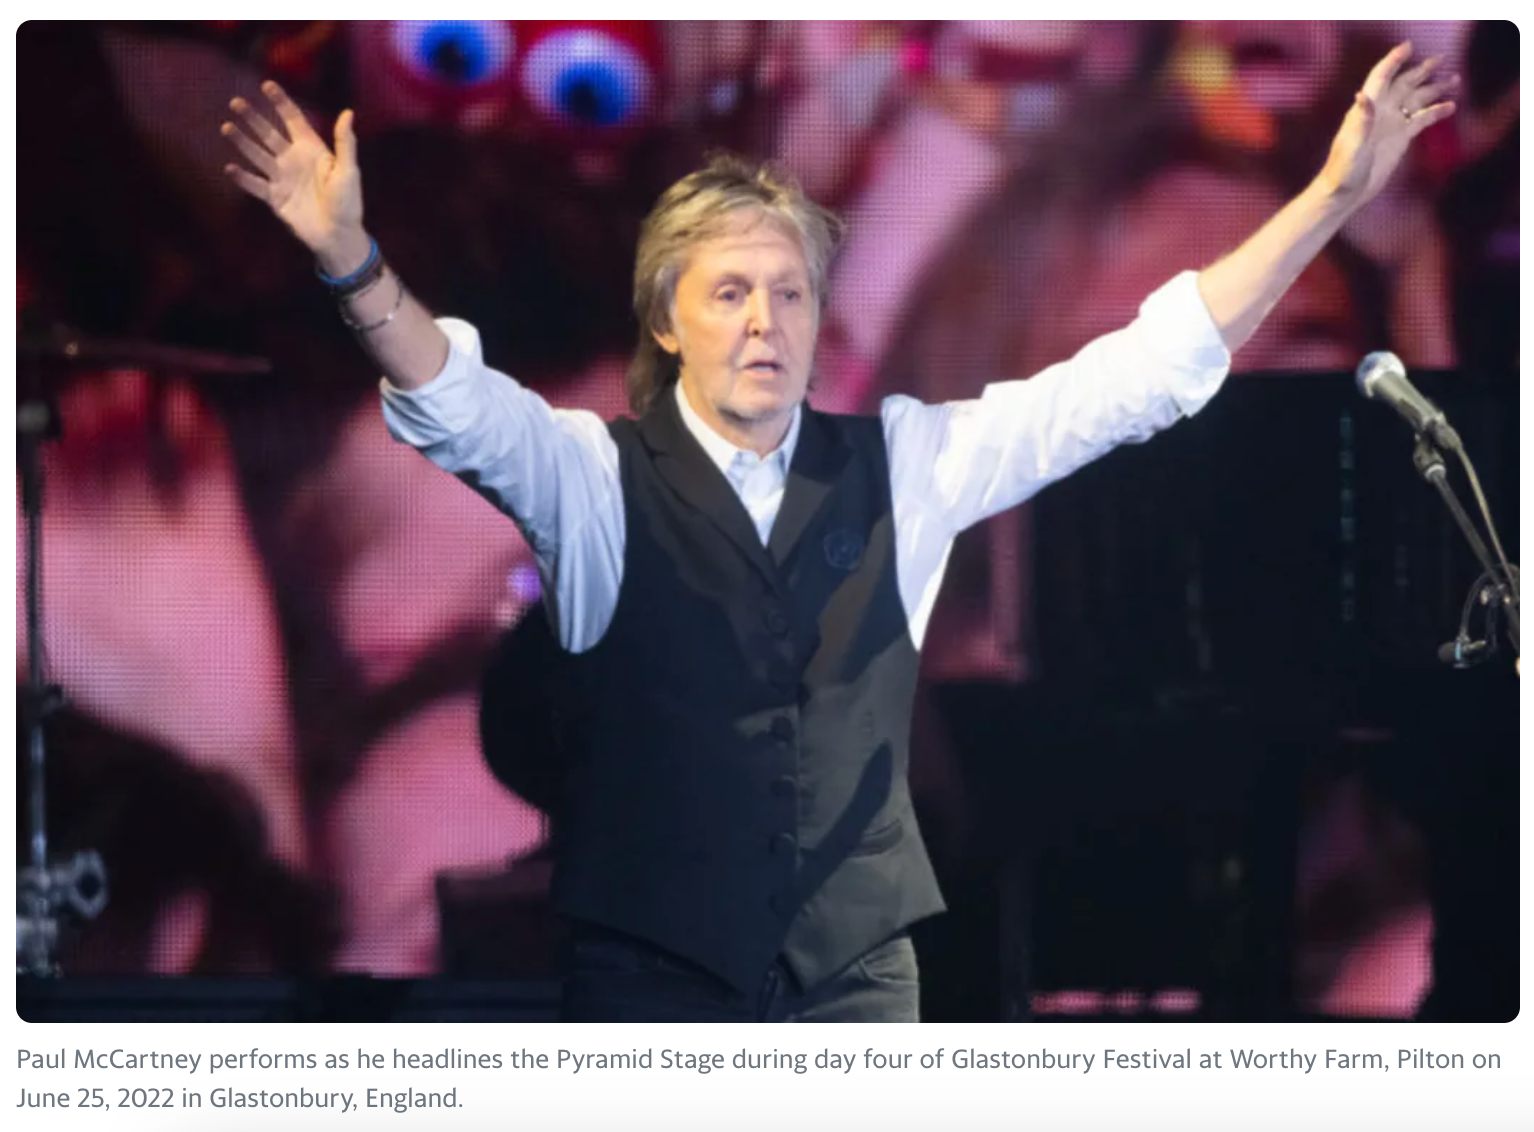 Sir Paul McCartney becomes a billionaire